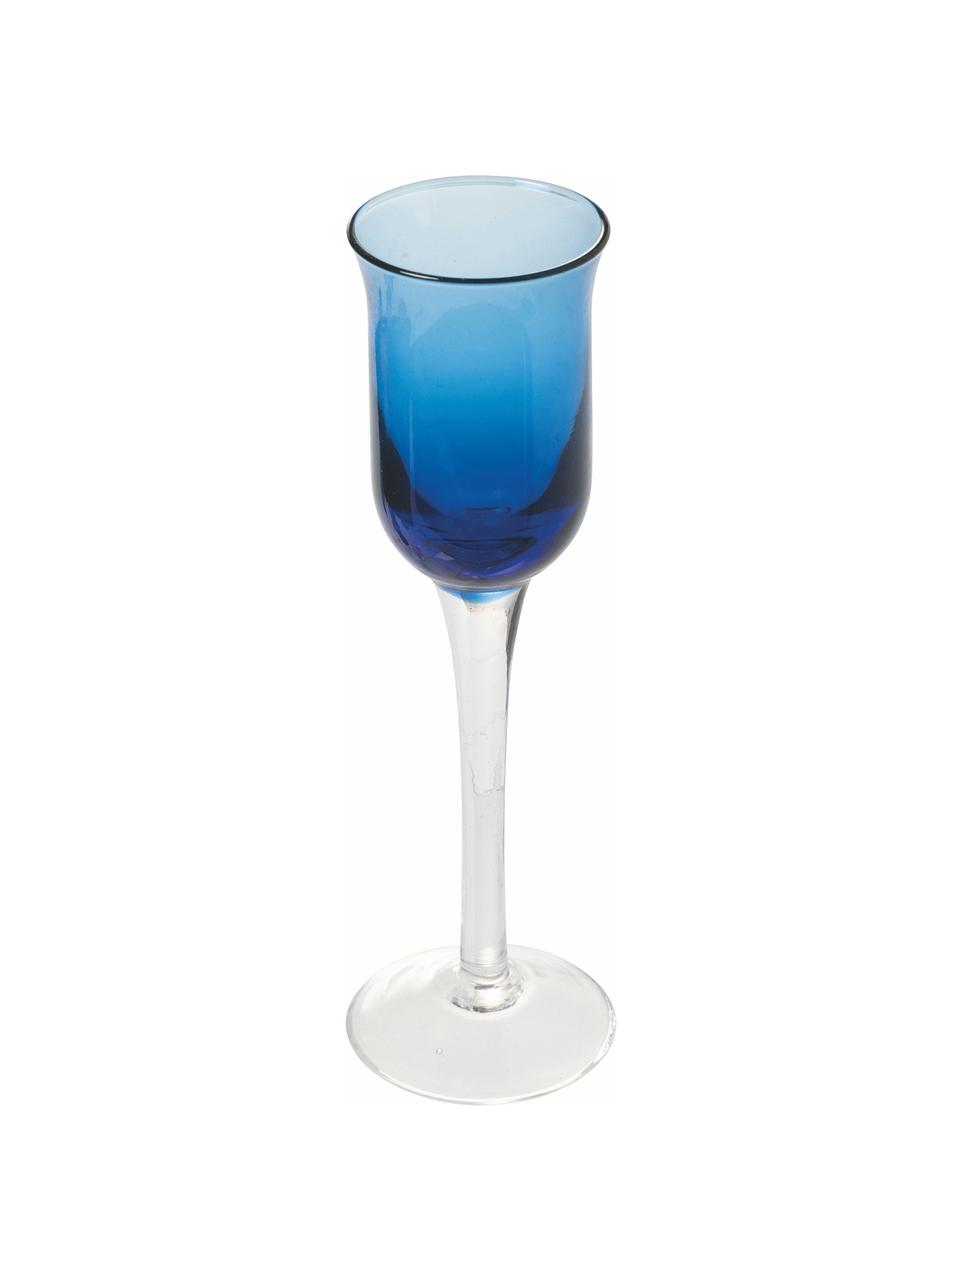 Borrelglaasjesset Chupos, 6-delig, Glas, Blauw, transparant, Ø 5 x H 16 cm